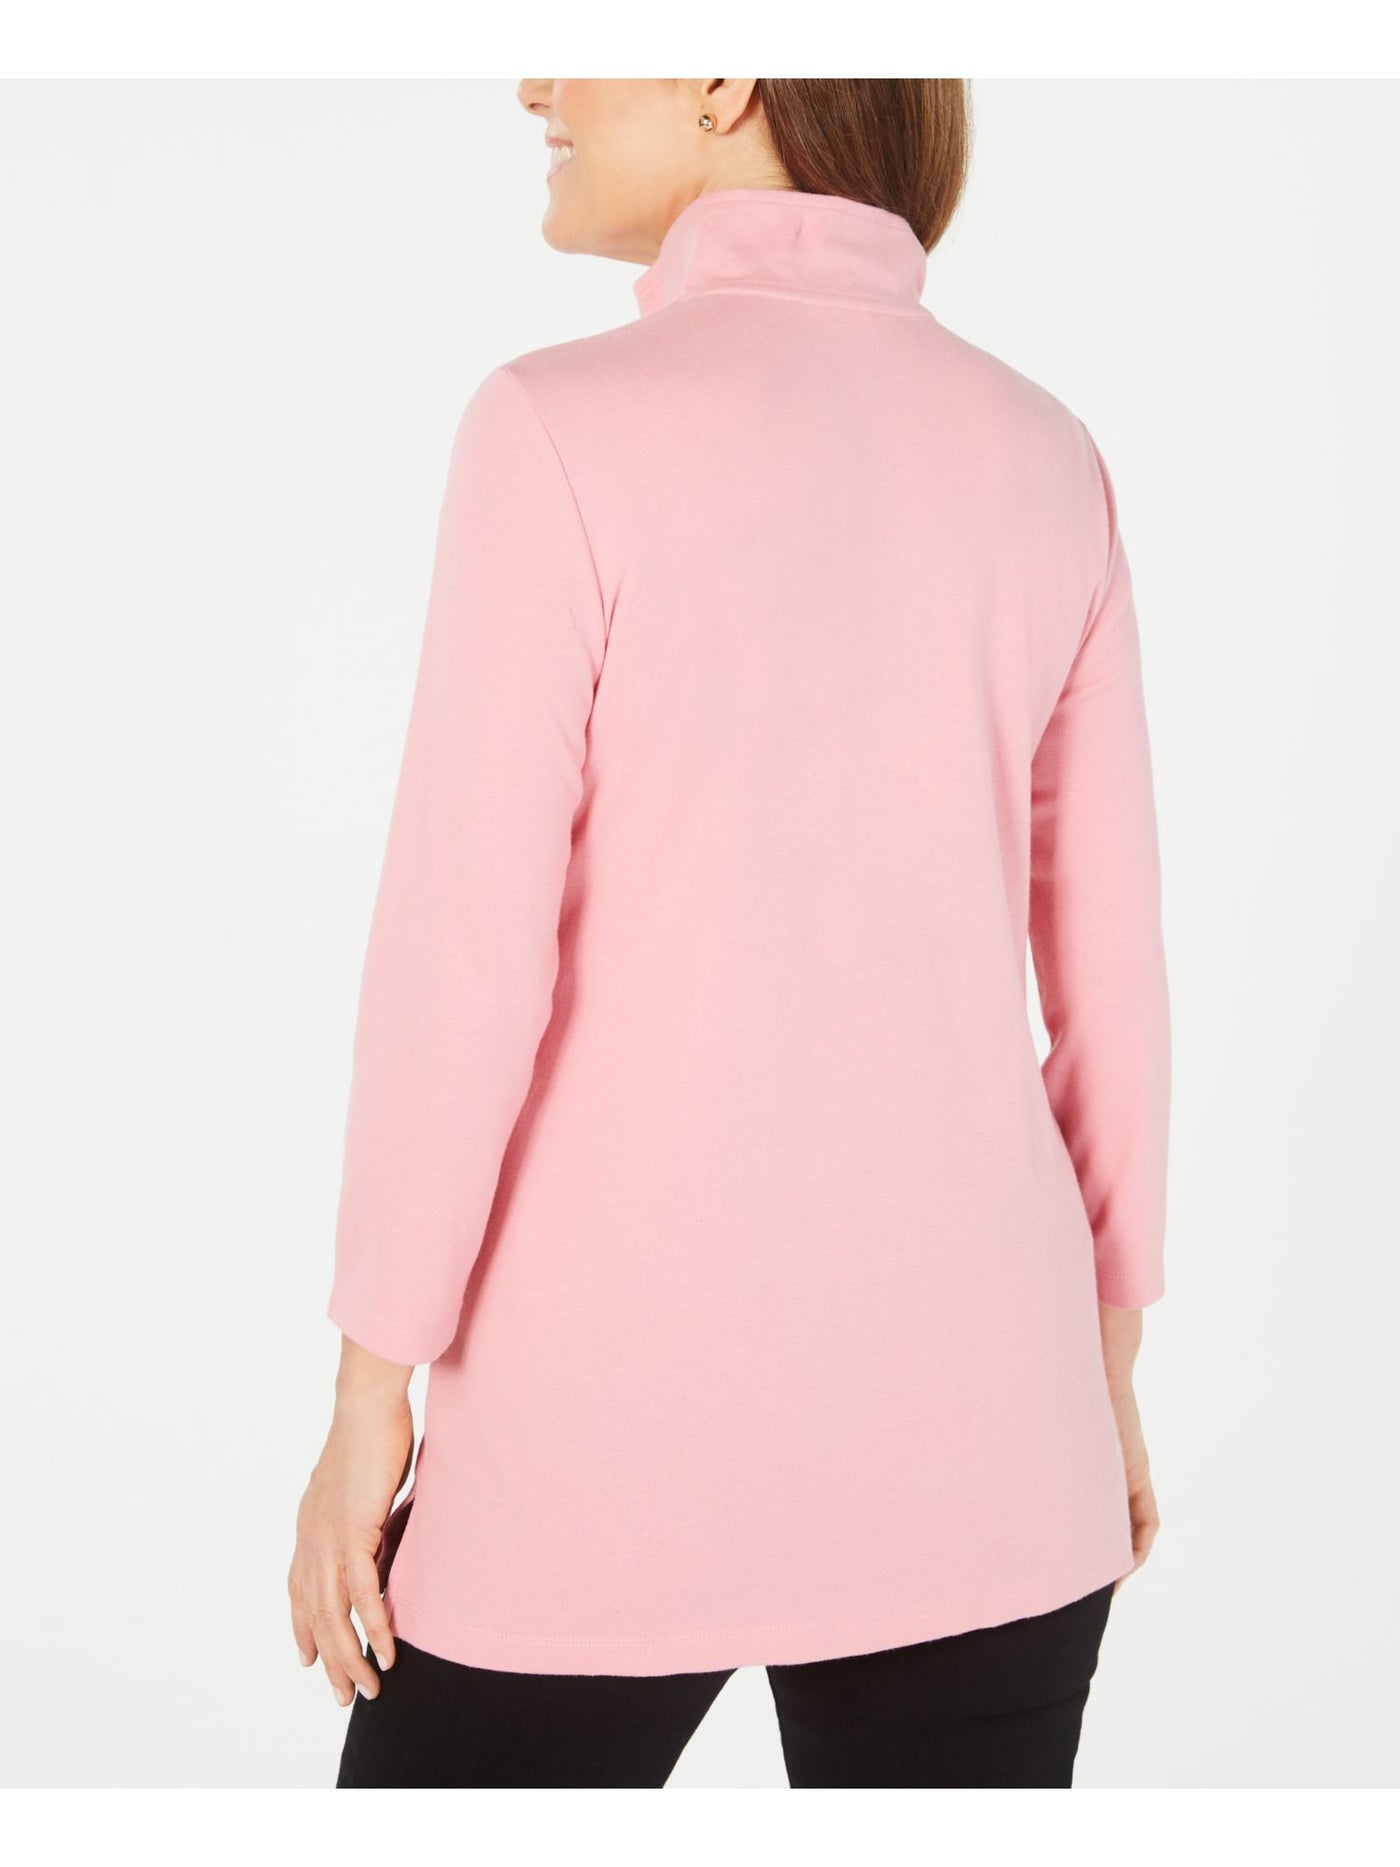 KAREN SCOTT Womens Pink Heather Long Sleeve Zip Neck Blouse S